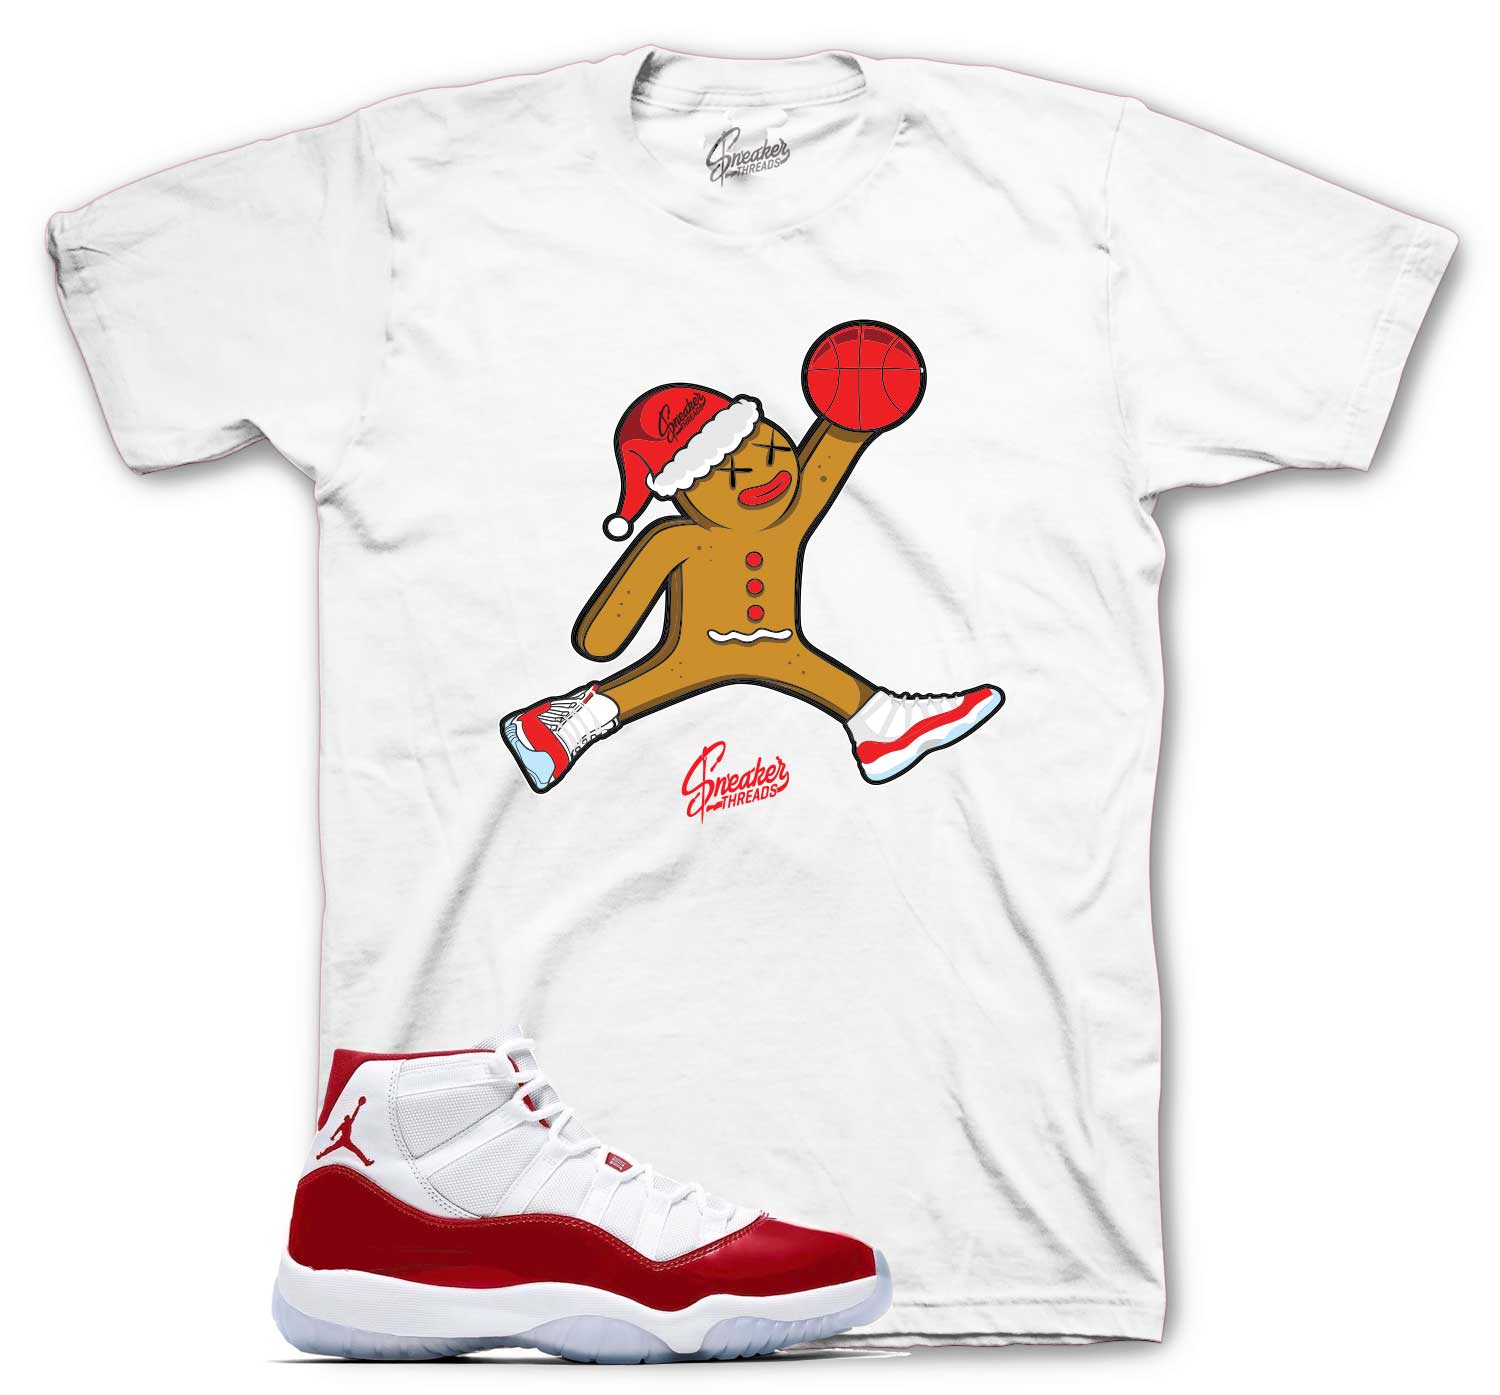 Ginger-Air T-Shirt - Retro 11 Cherry Shirt